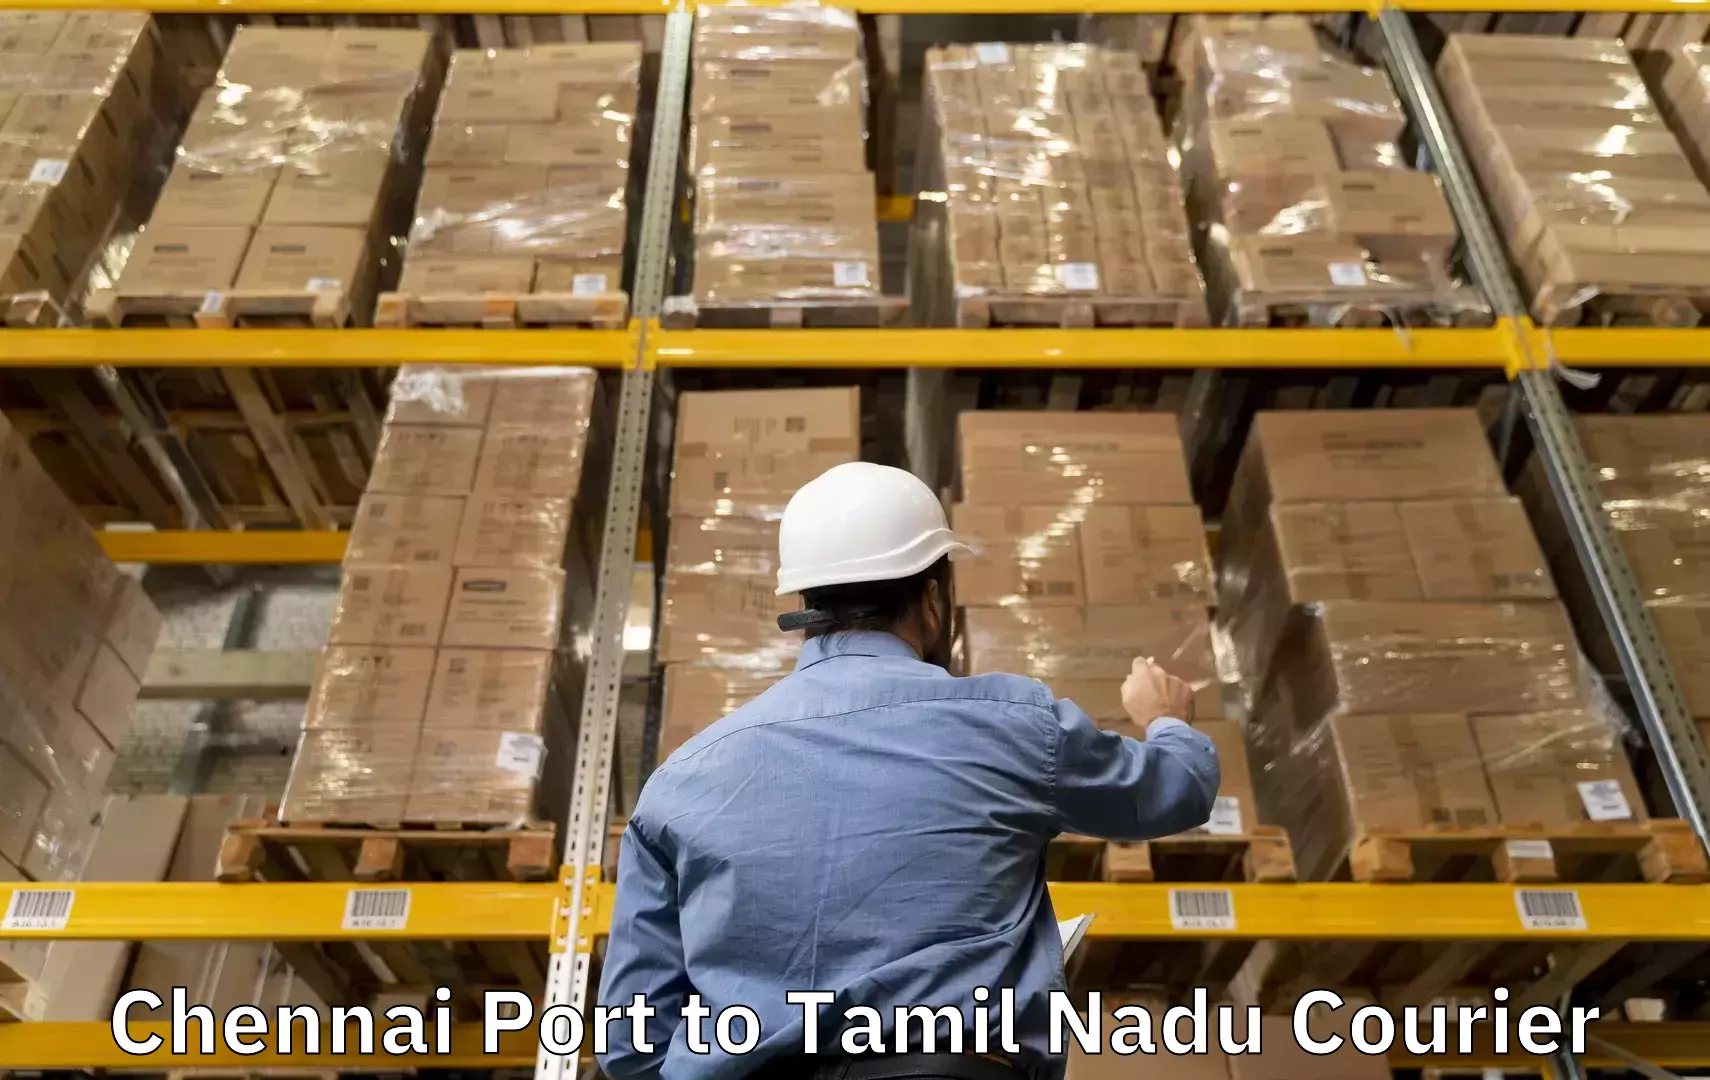 Luggage transport company Chennai Port to Tamil Nadu